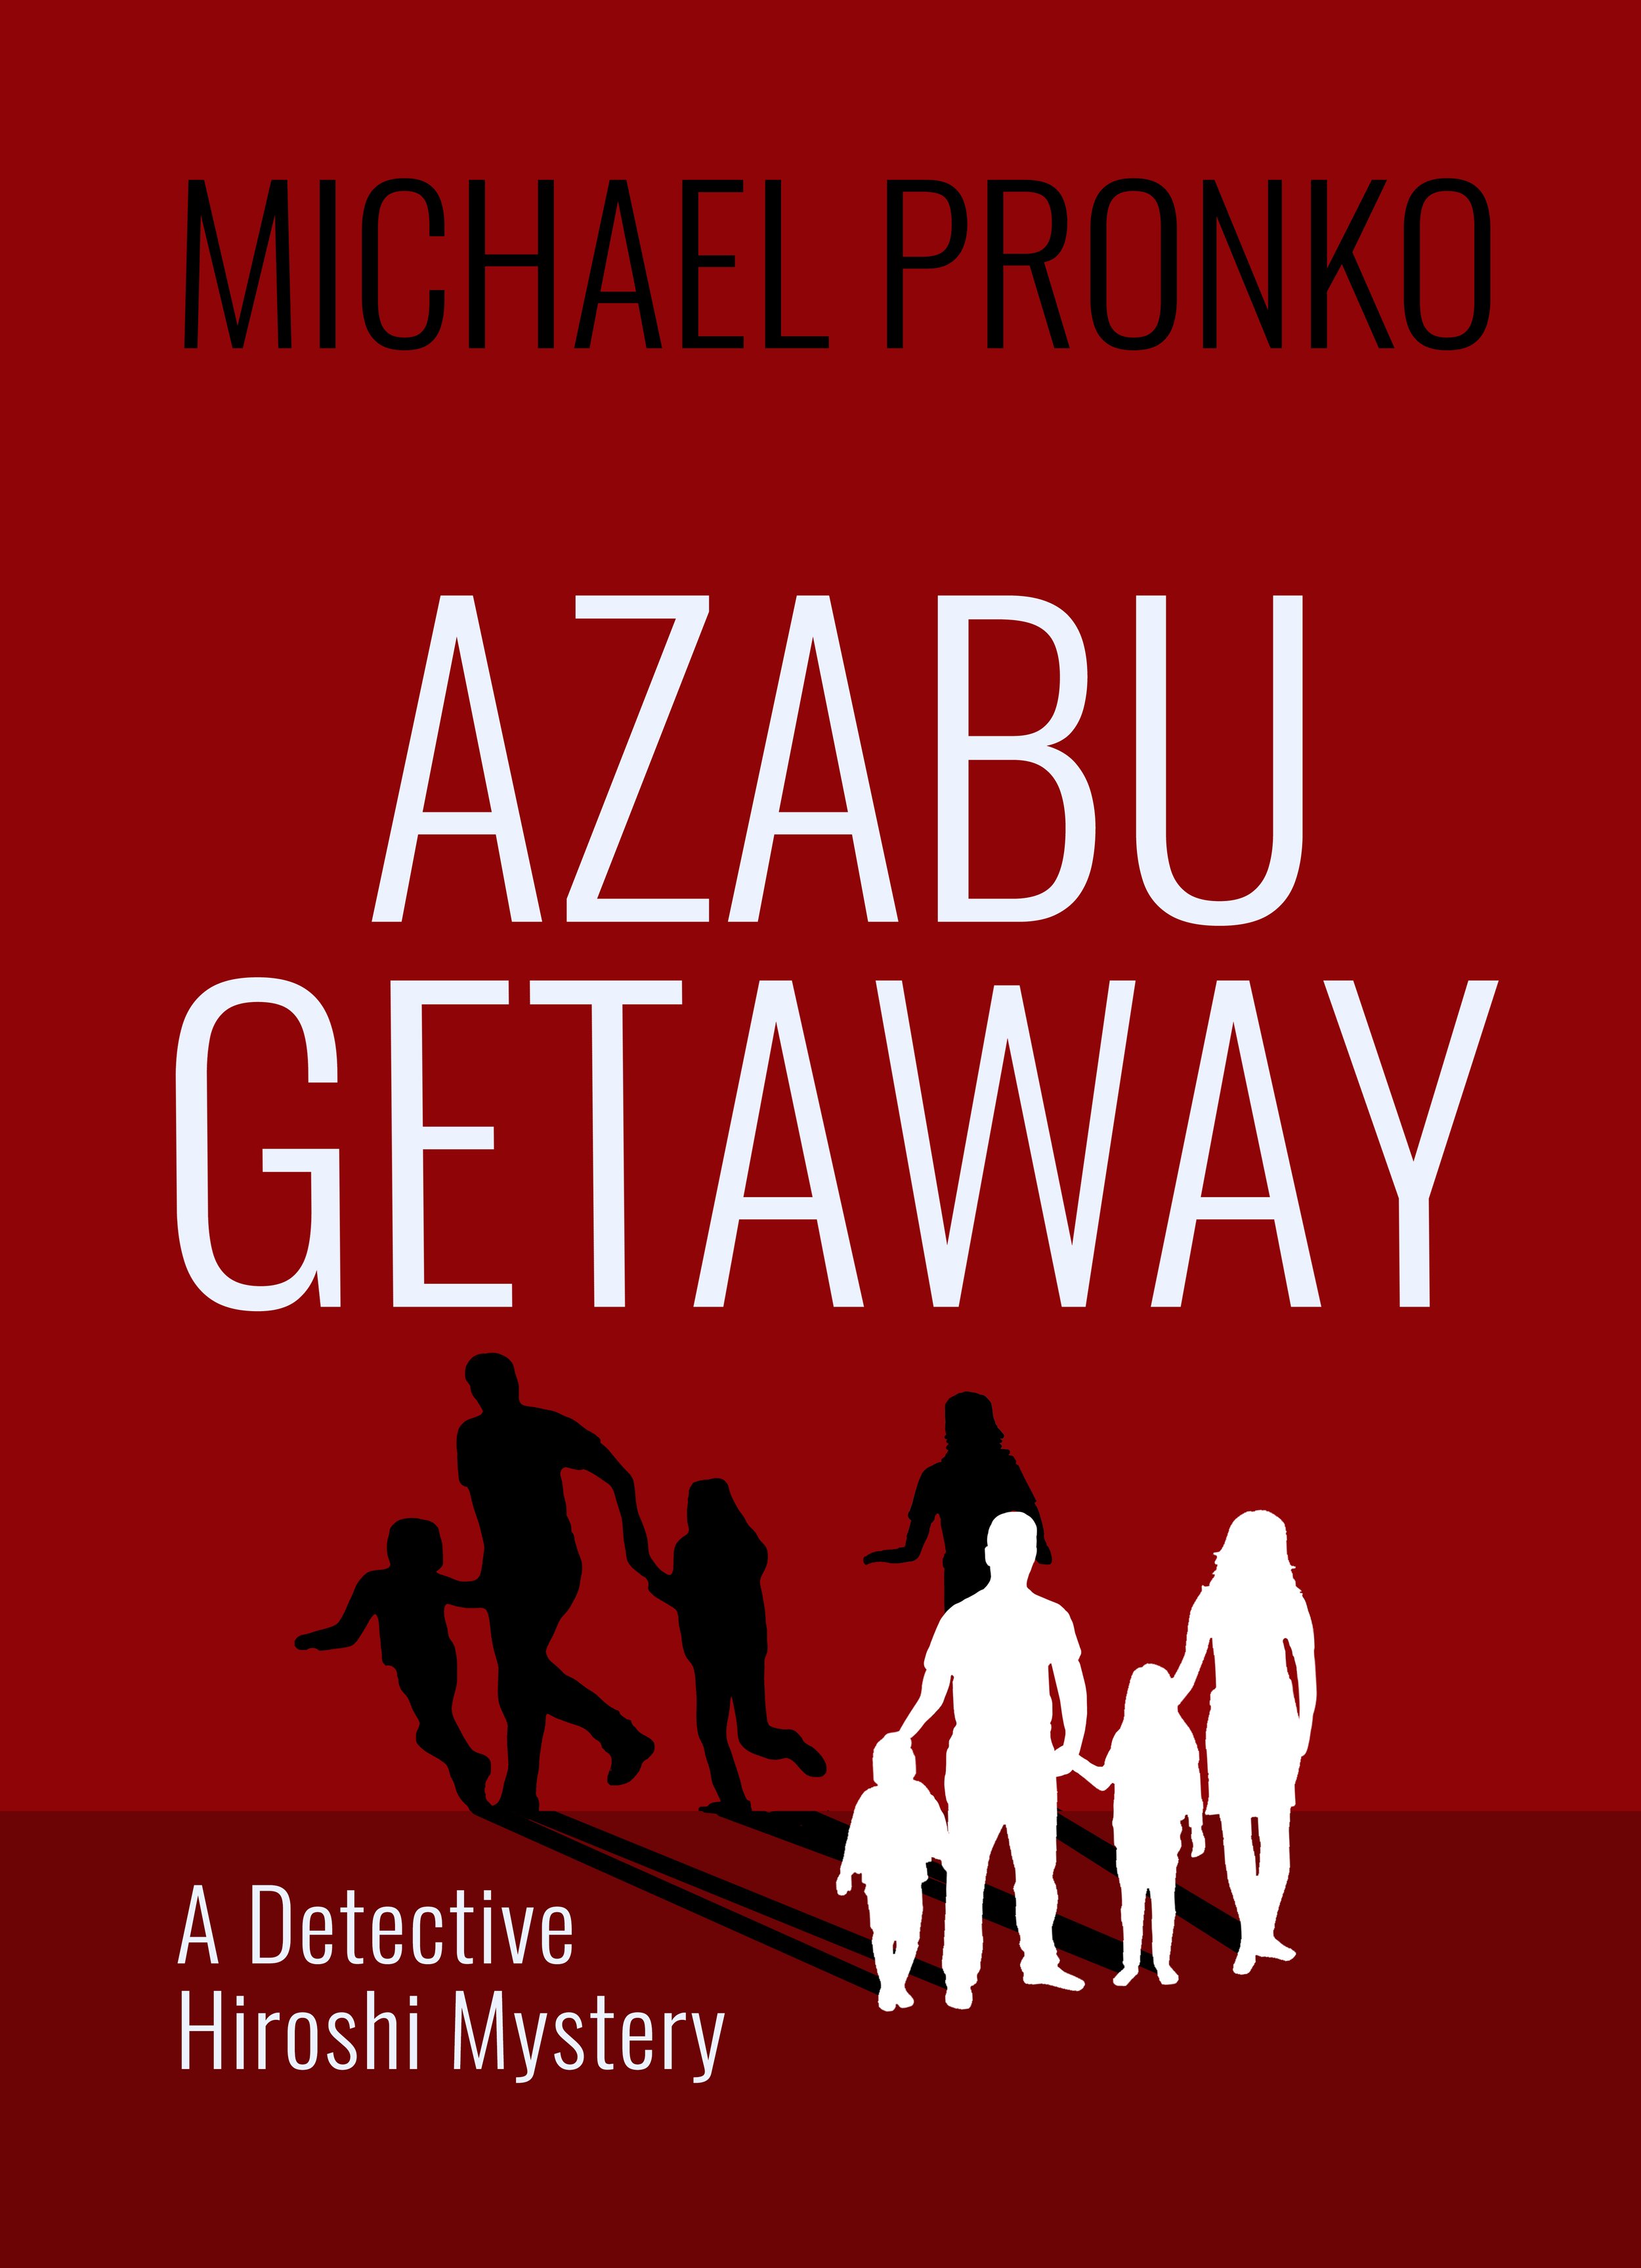 Azabu Getaway cover.jpg